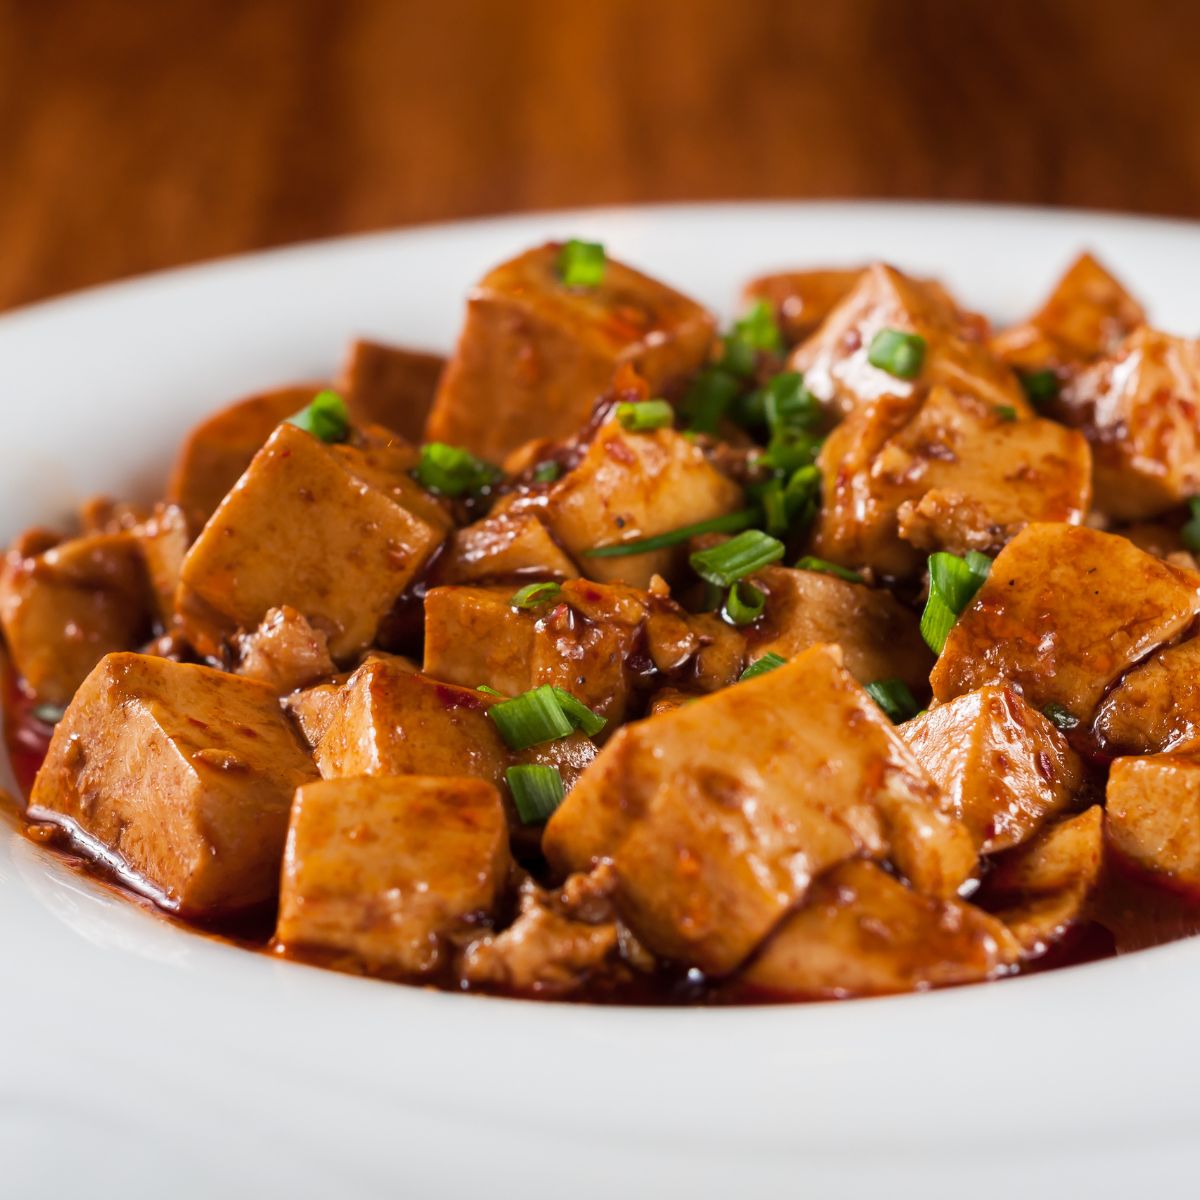 cubed juicy tofu with brown sauce